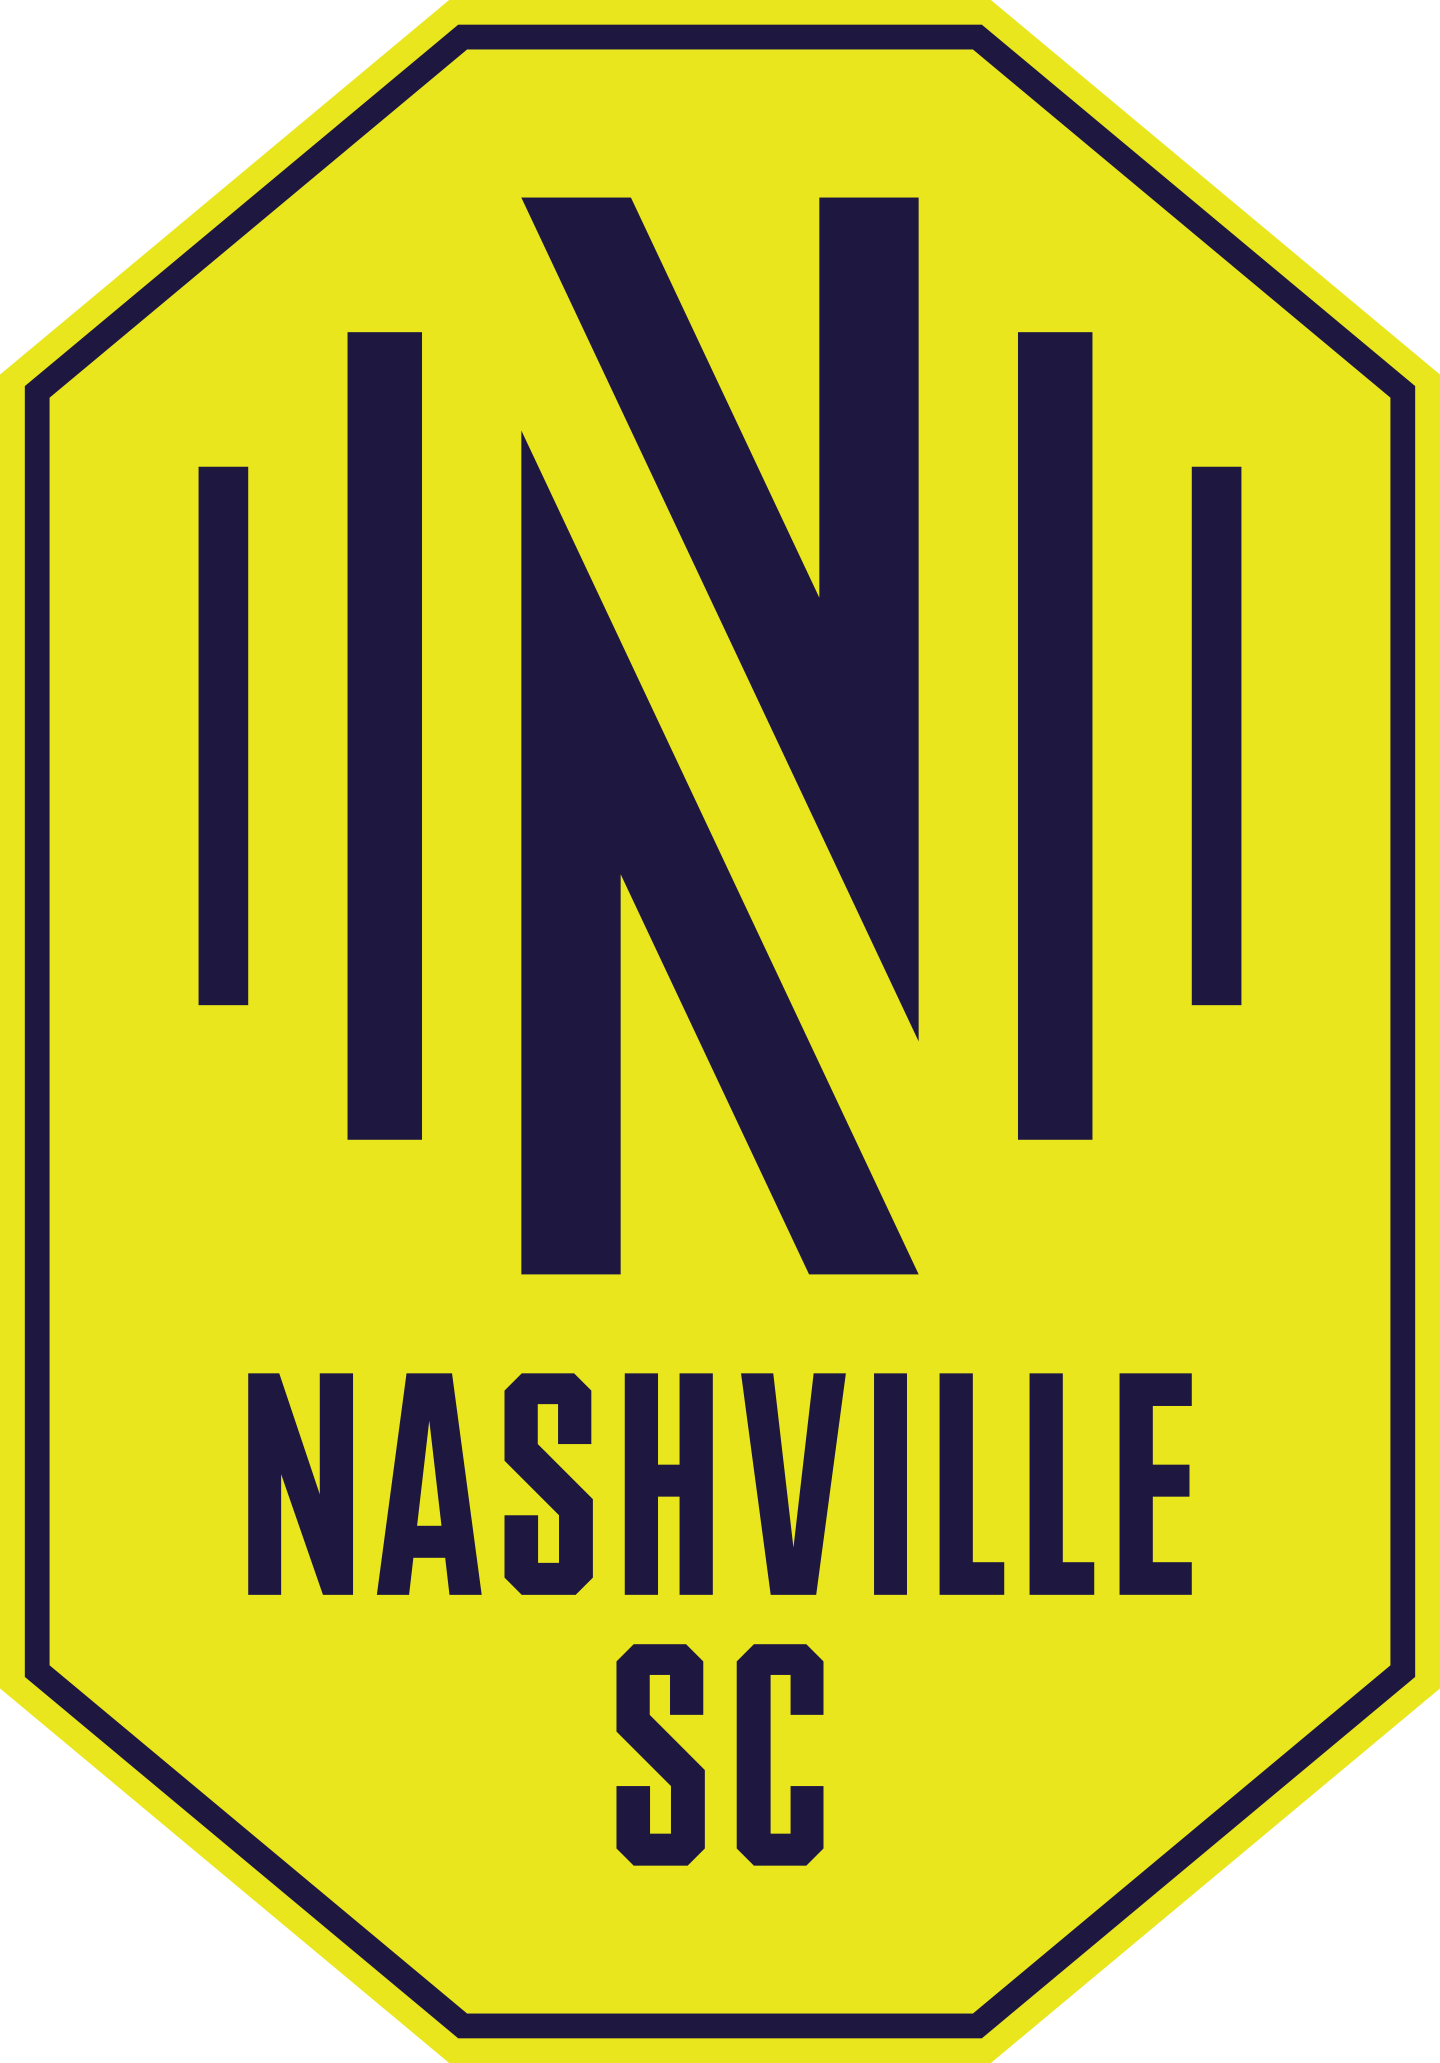 Nashville Soccer Club logo.